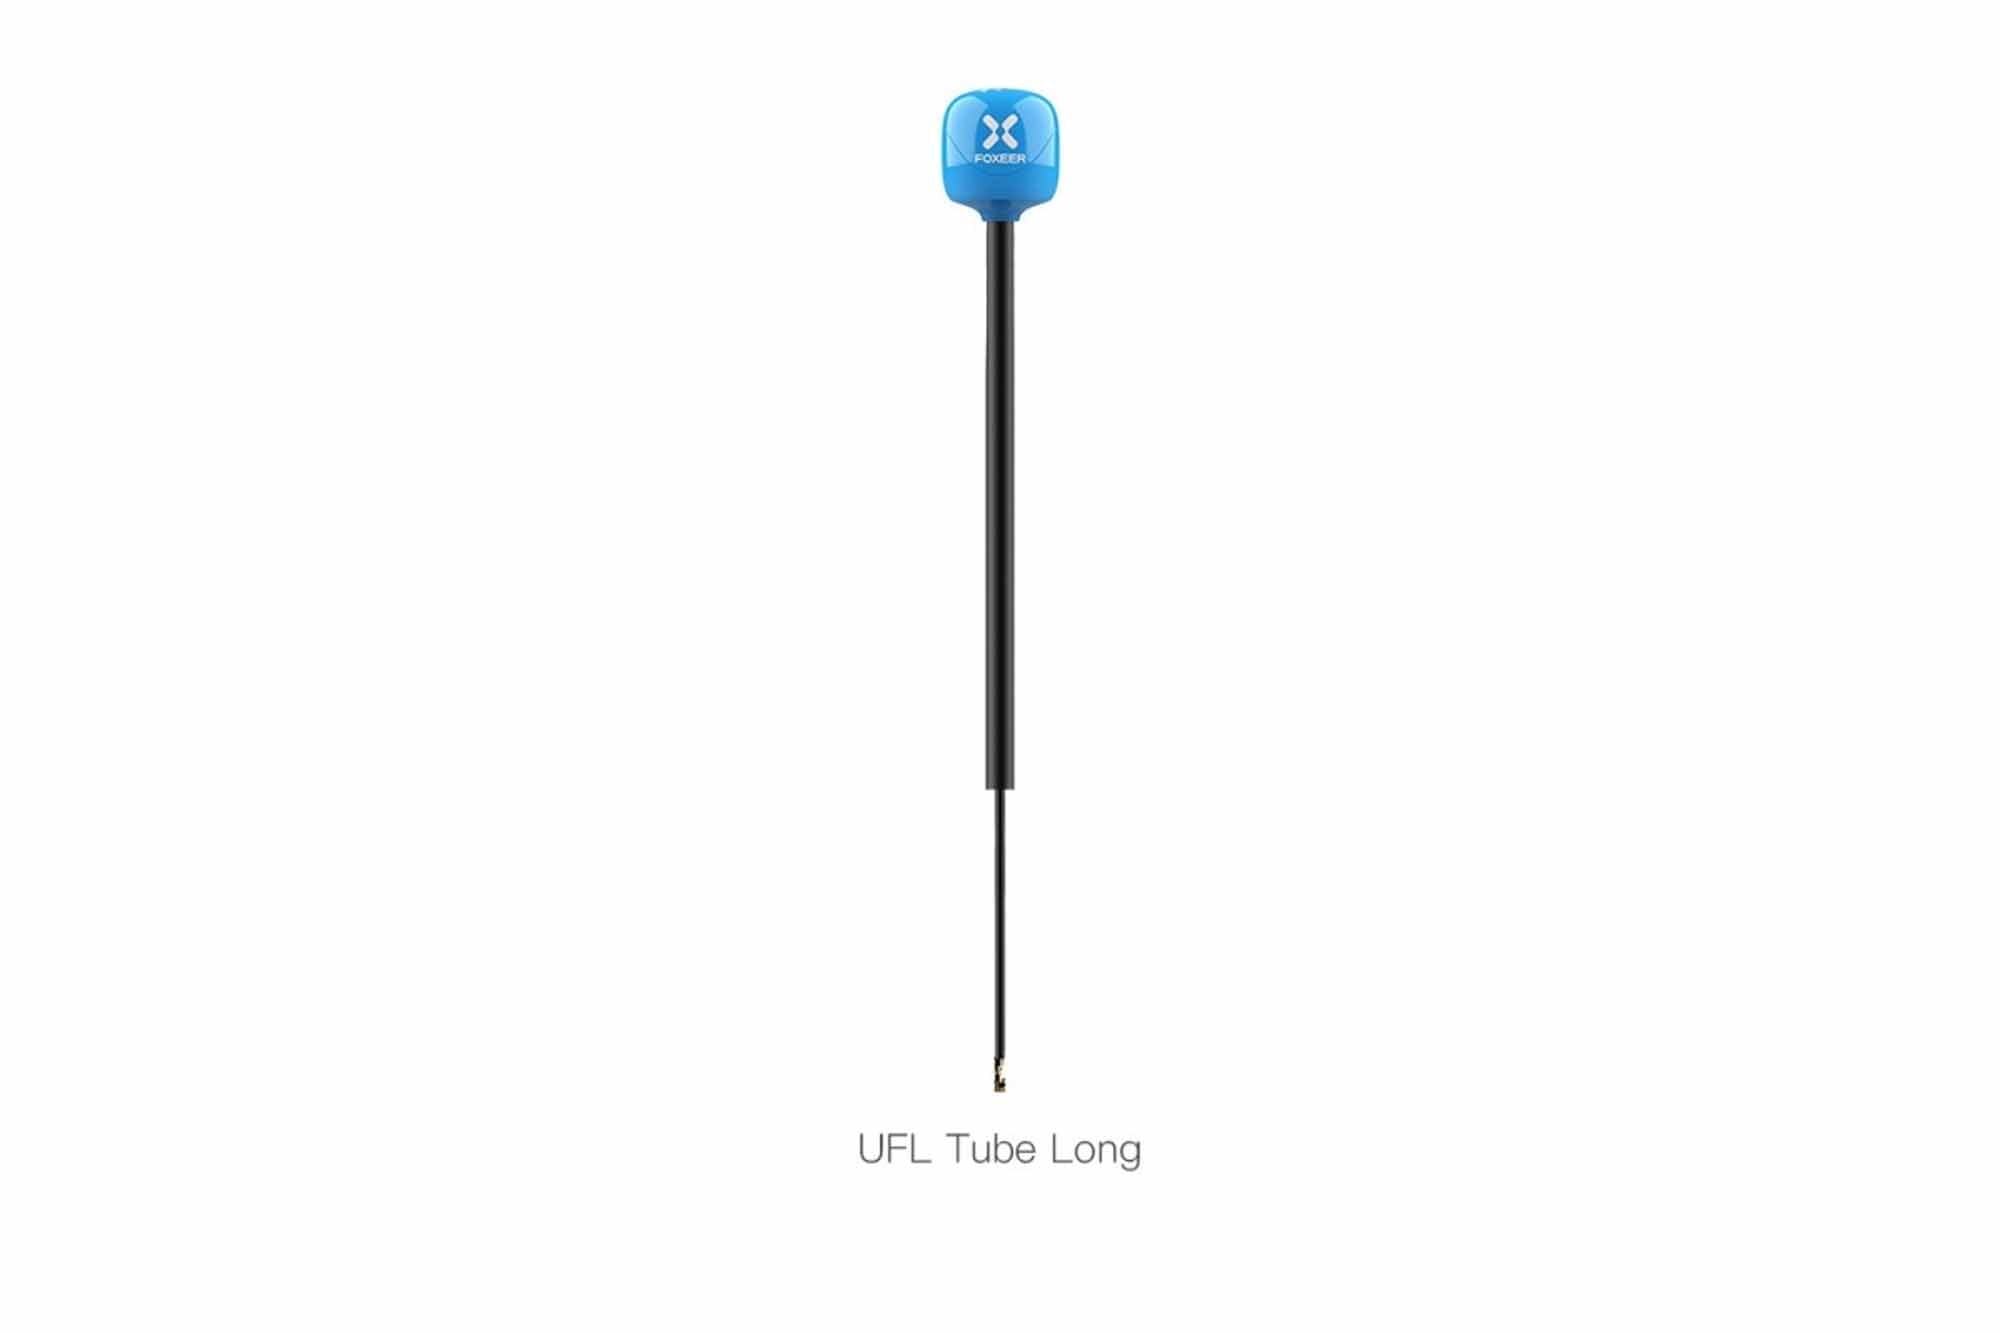 Foxeer Lollipop 4 Plus High Quality 5.8G 2.6dBi FPV Omni LDS Antenna (2pcs)